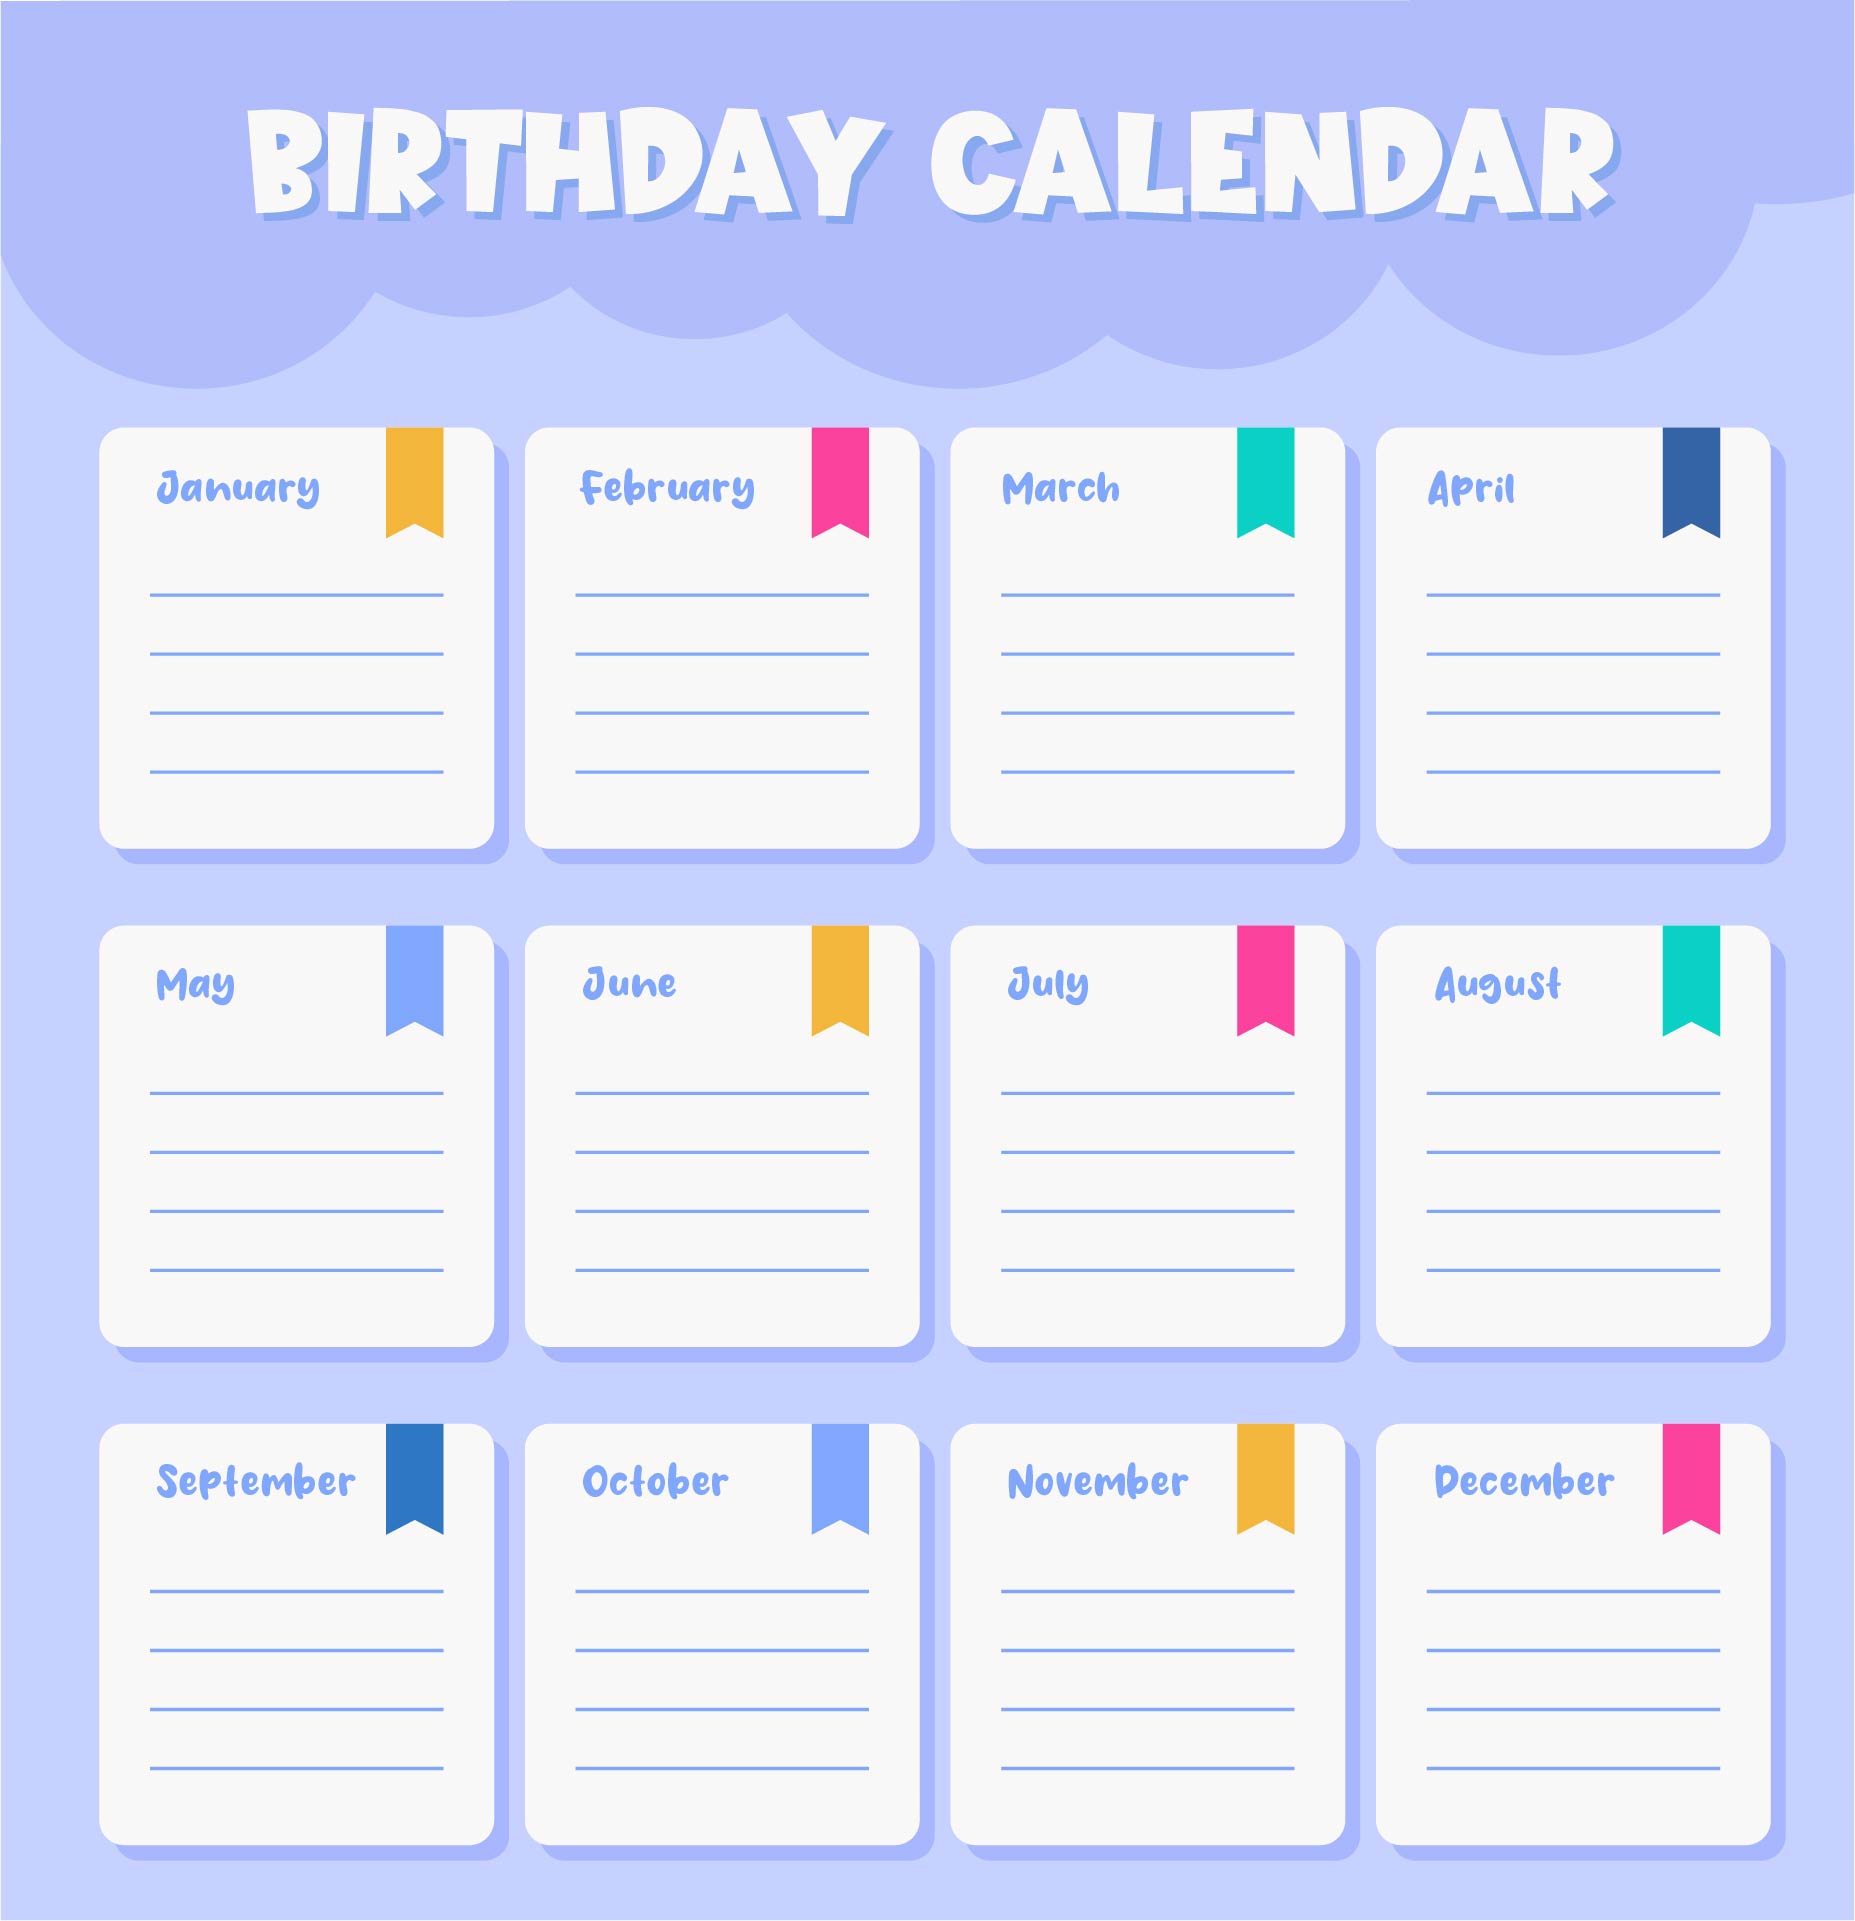 10 Best Family Birthday Calendar Free Printable - printablee.com